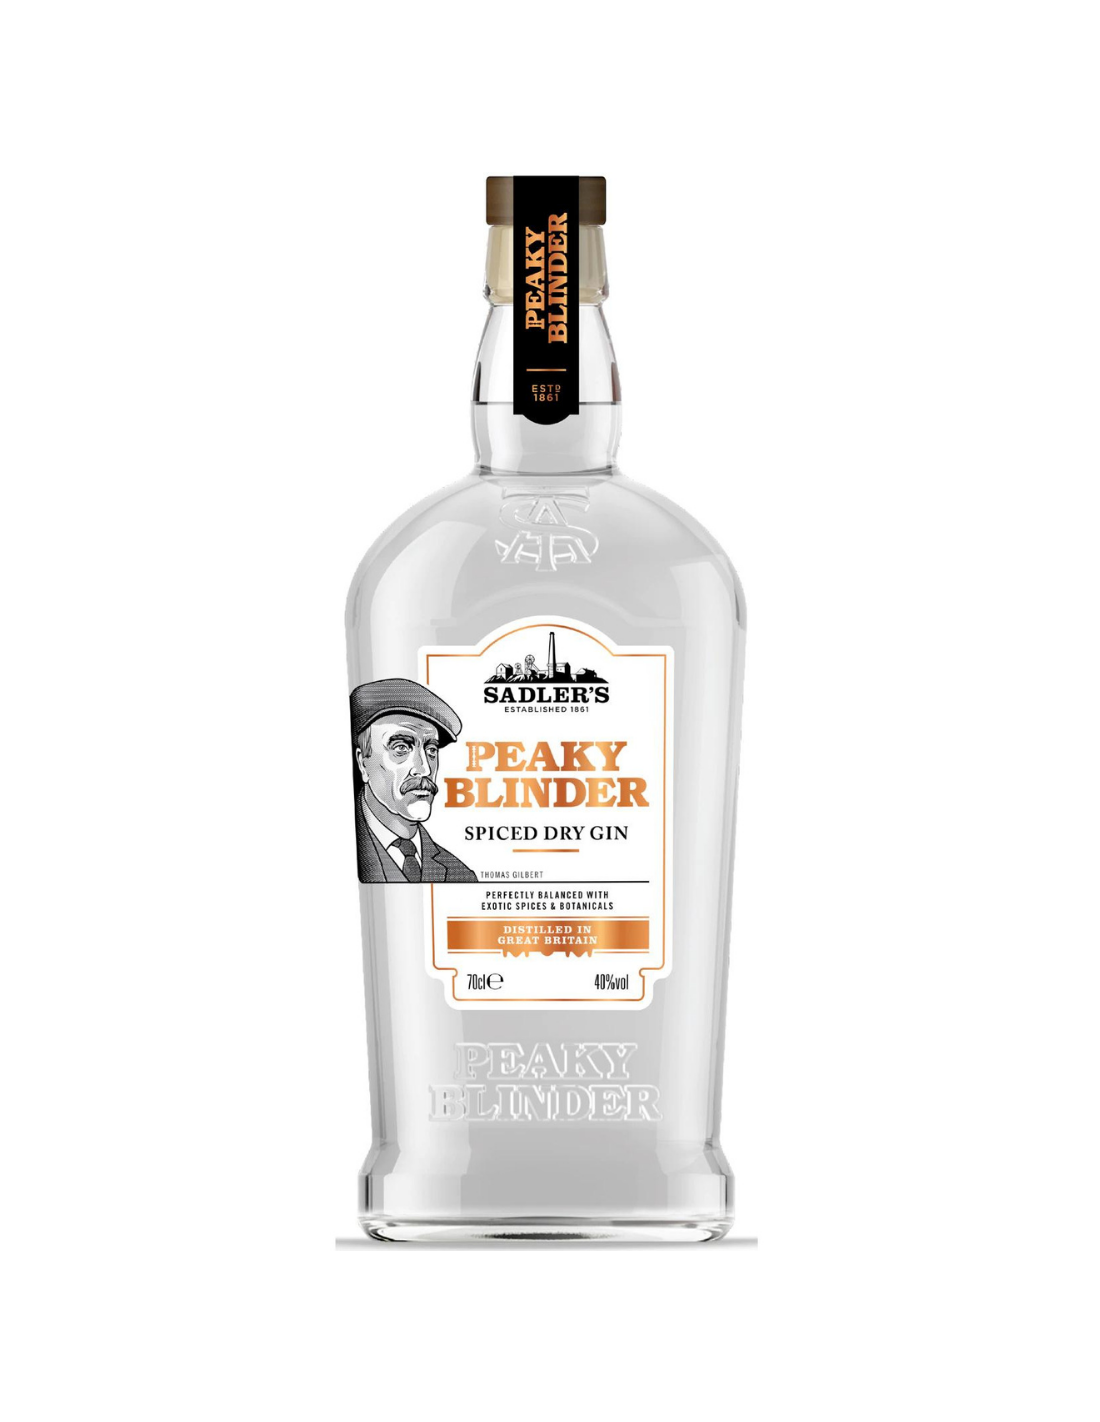 Gin Sadler’s Peaky Blinder Spiced Dry, 40% alc., 0.7L, Marea Britanie alcooldiscount.ro